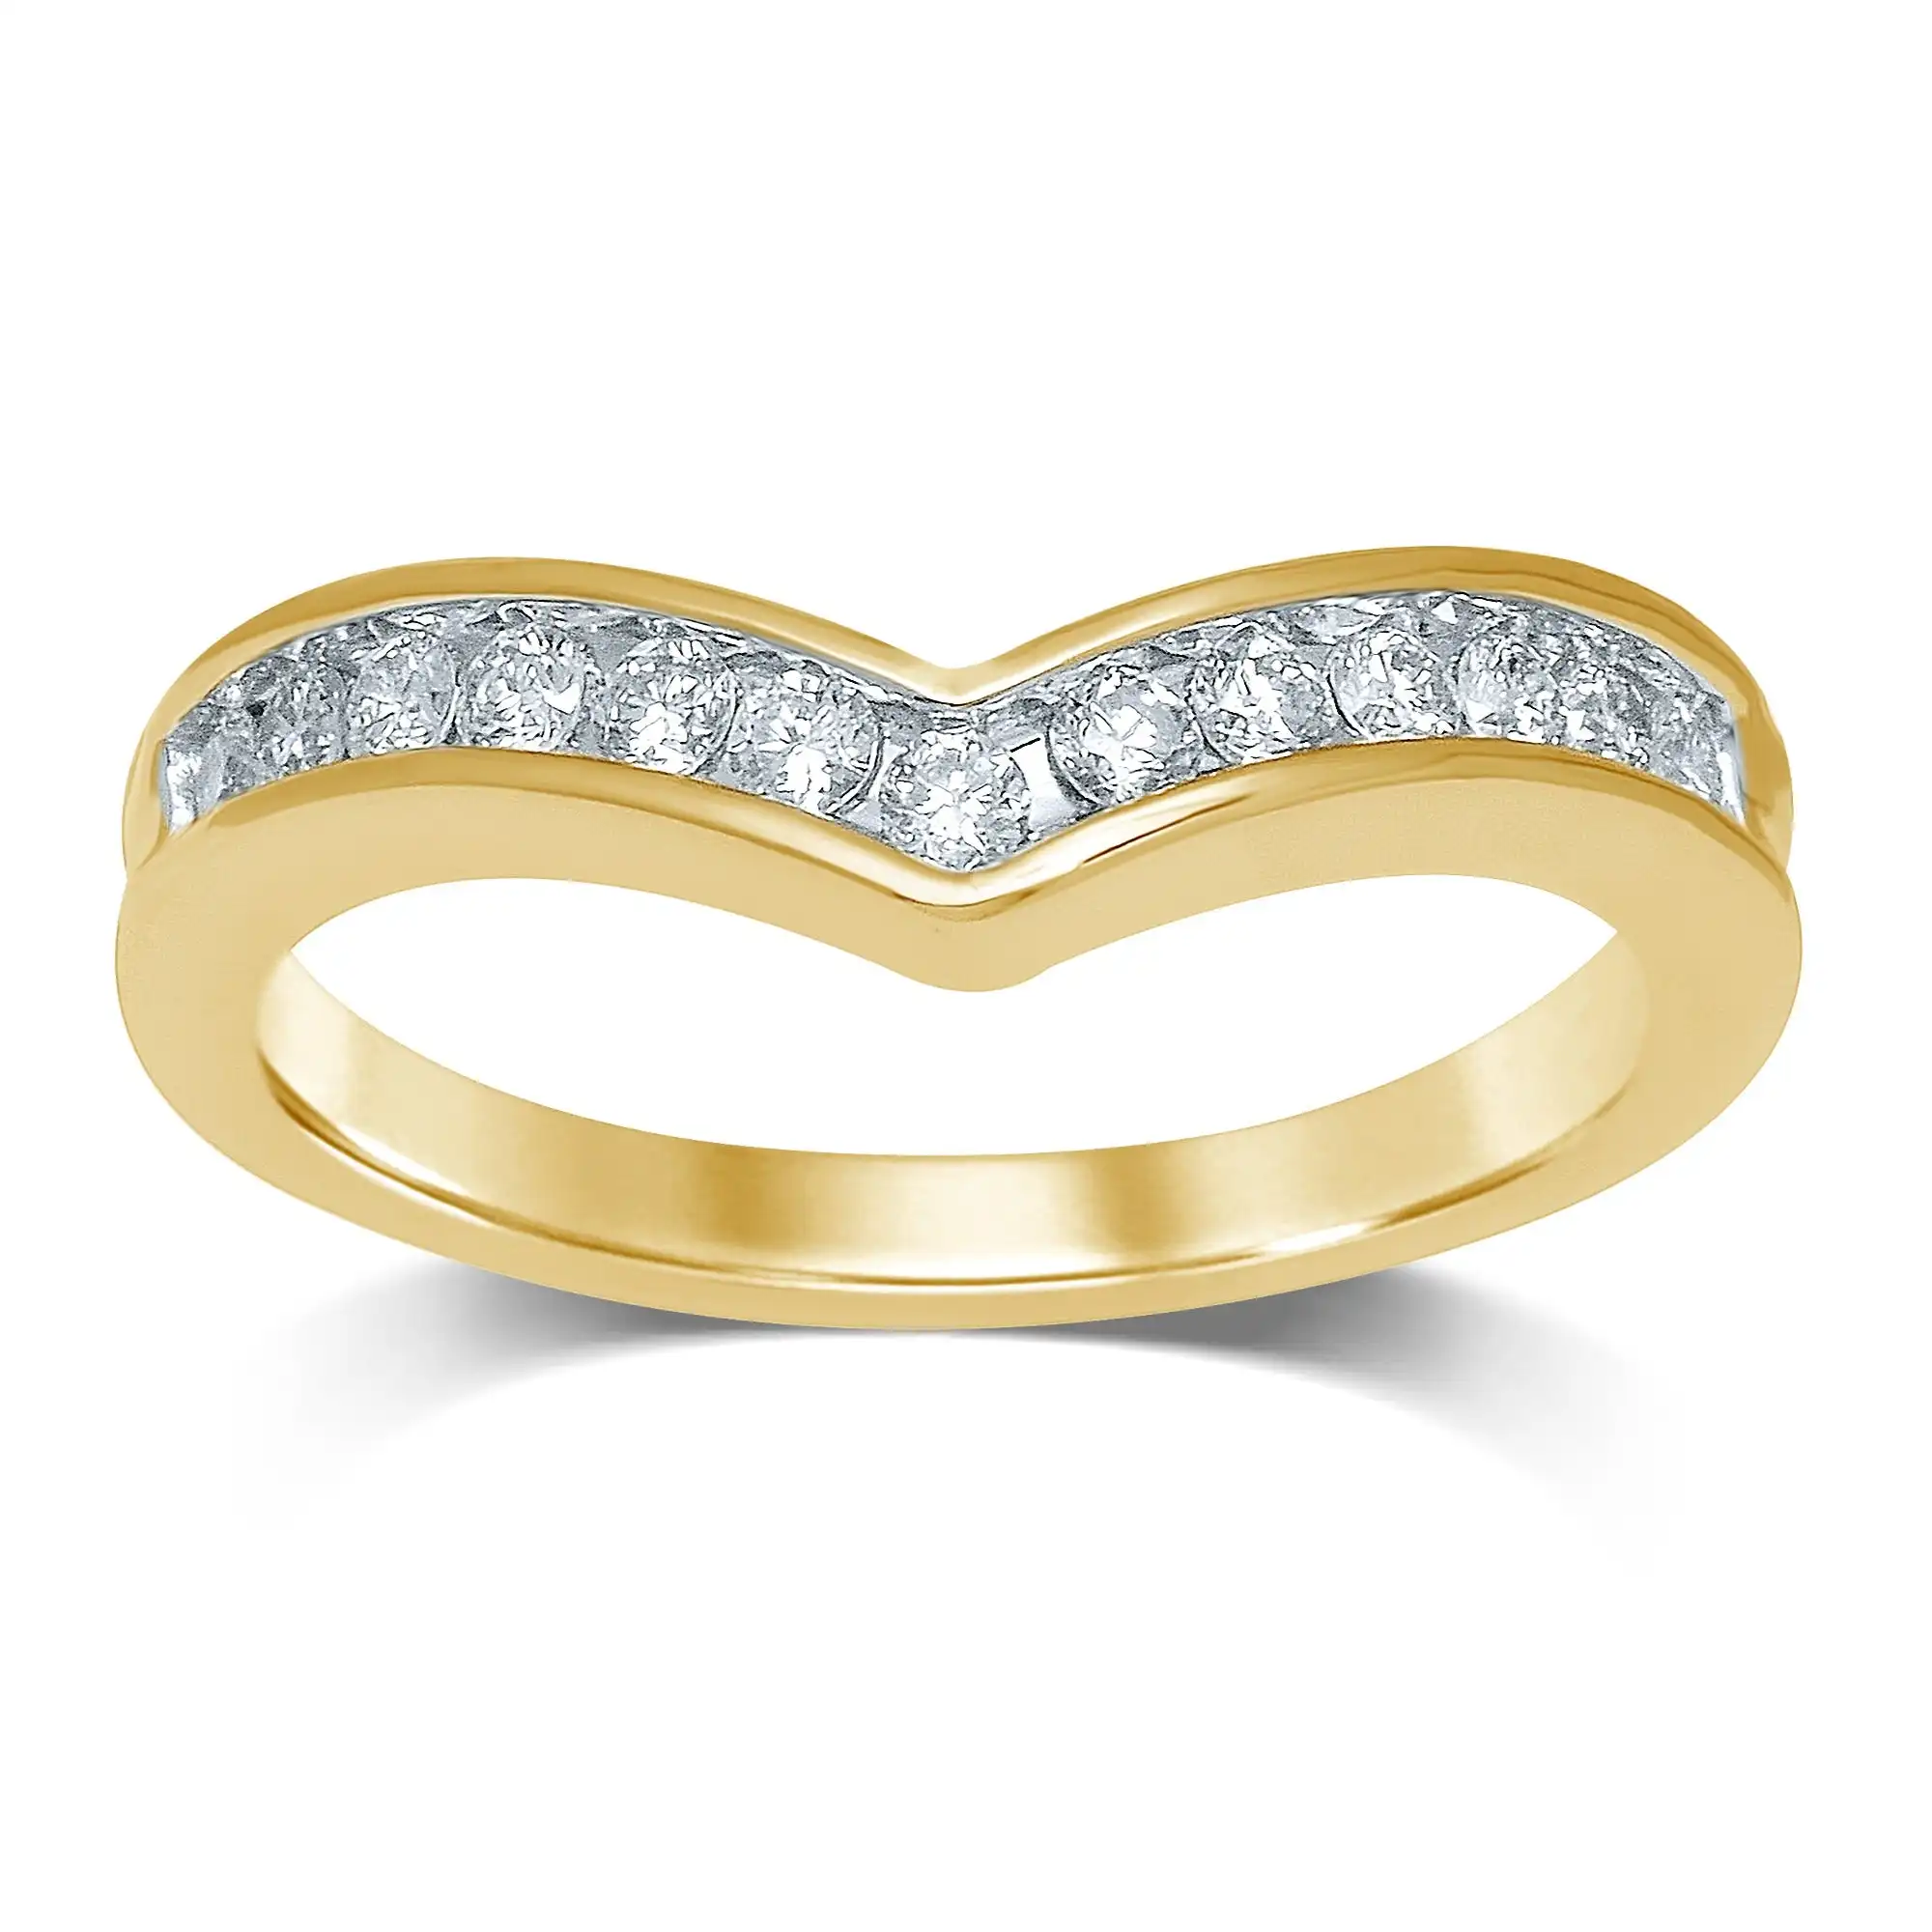 9ct Yellow Gold Contour Diamond Ring with 13 Brilliant Diamonds